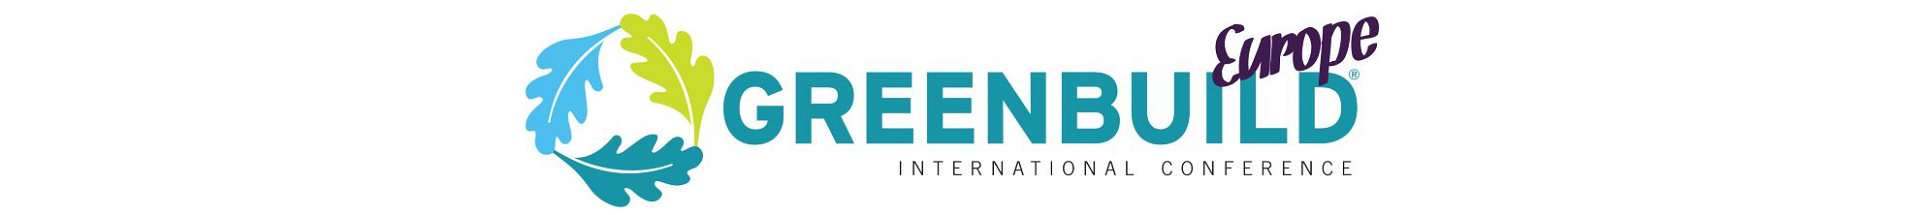 Greenbuild Europe 2020 Event Banner